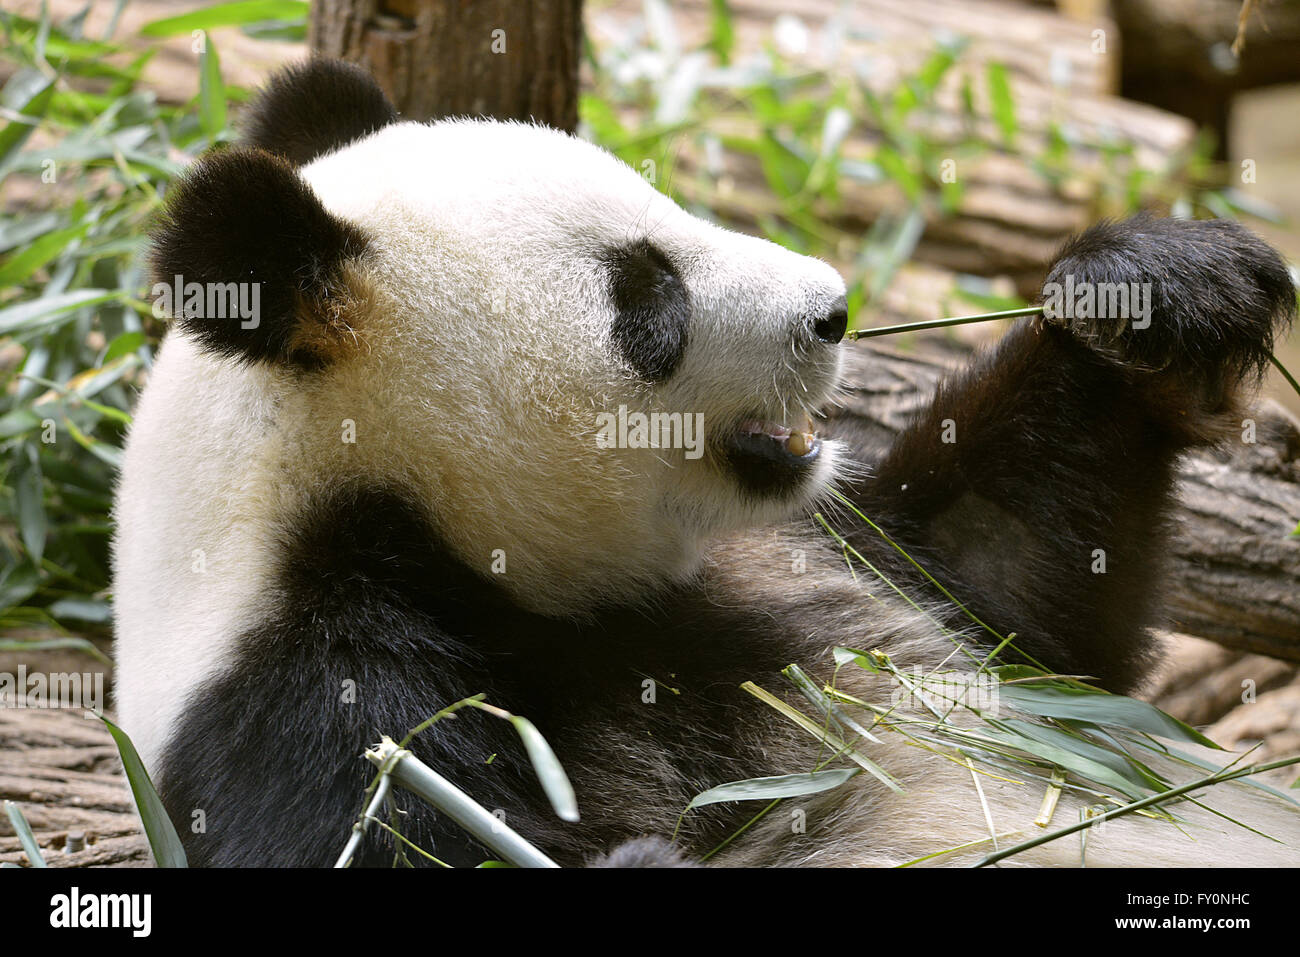 Closeup of Giant panda (Ailuropoda melanoleuca) eating bamboo Stock Photo